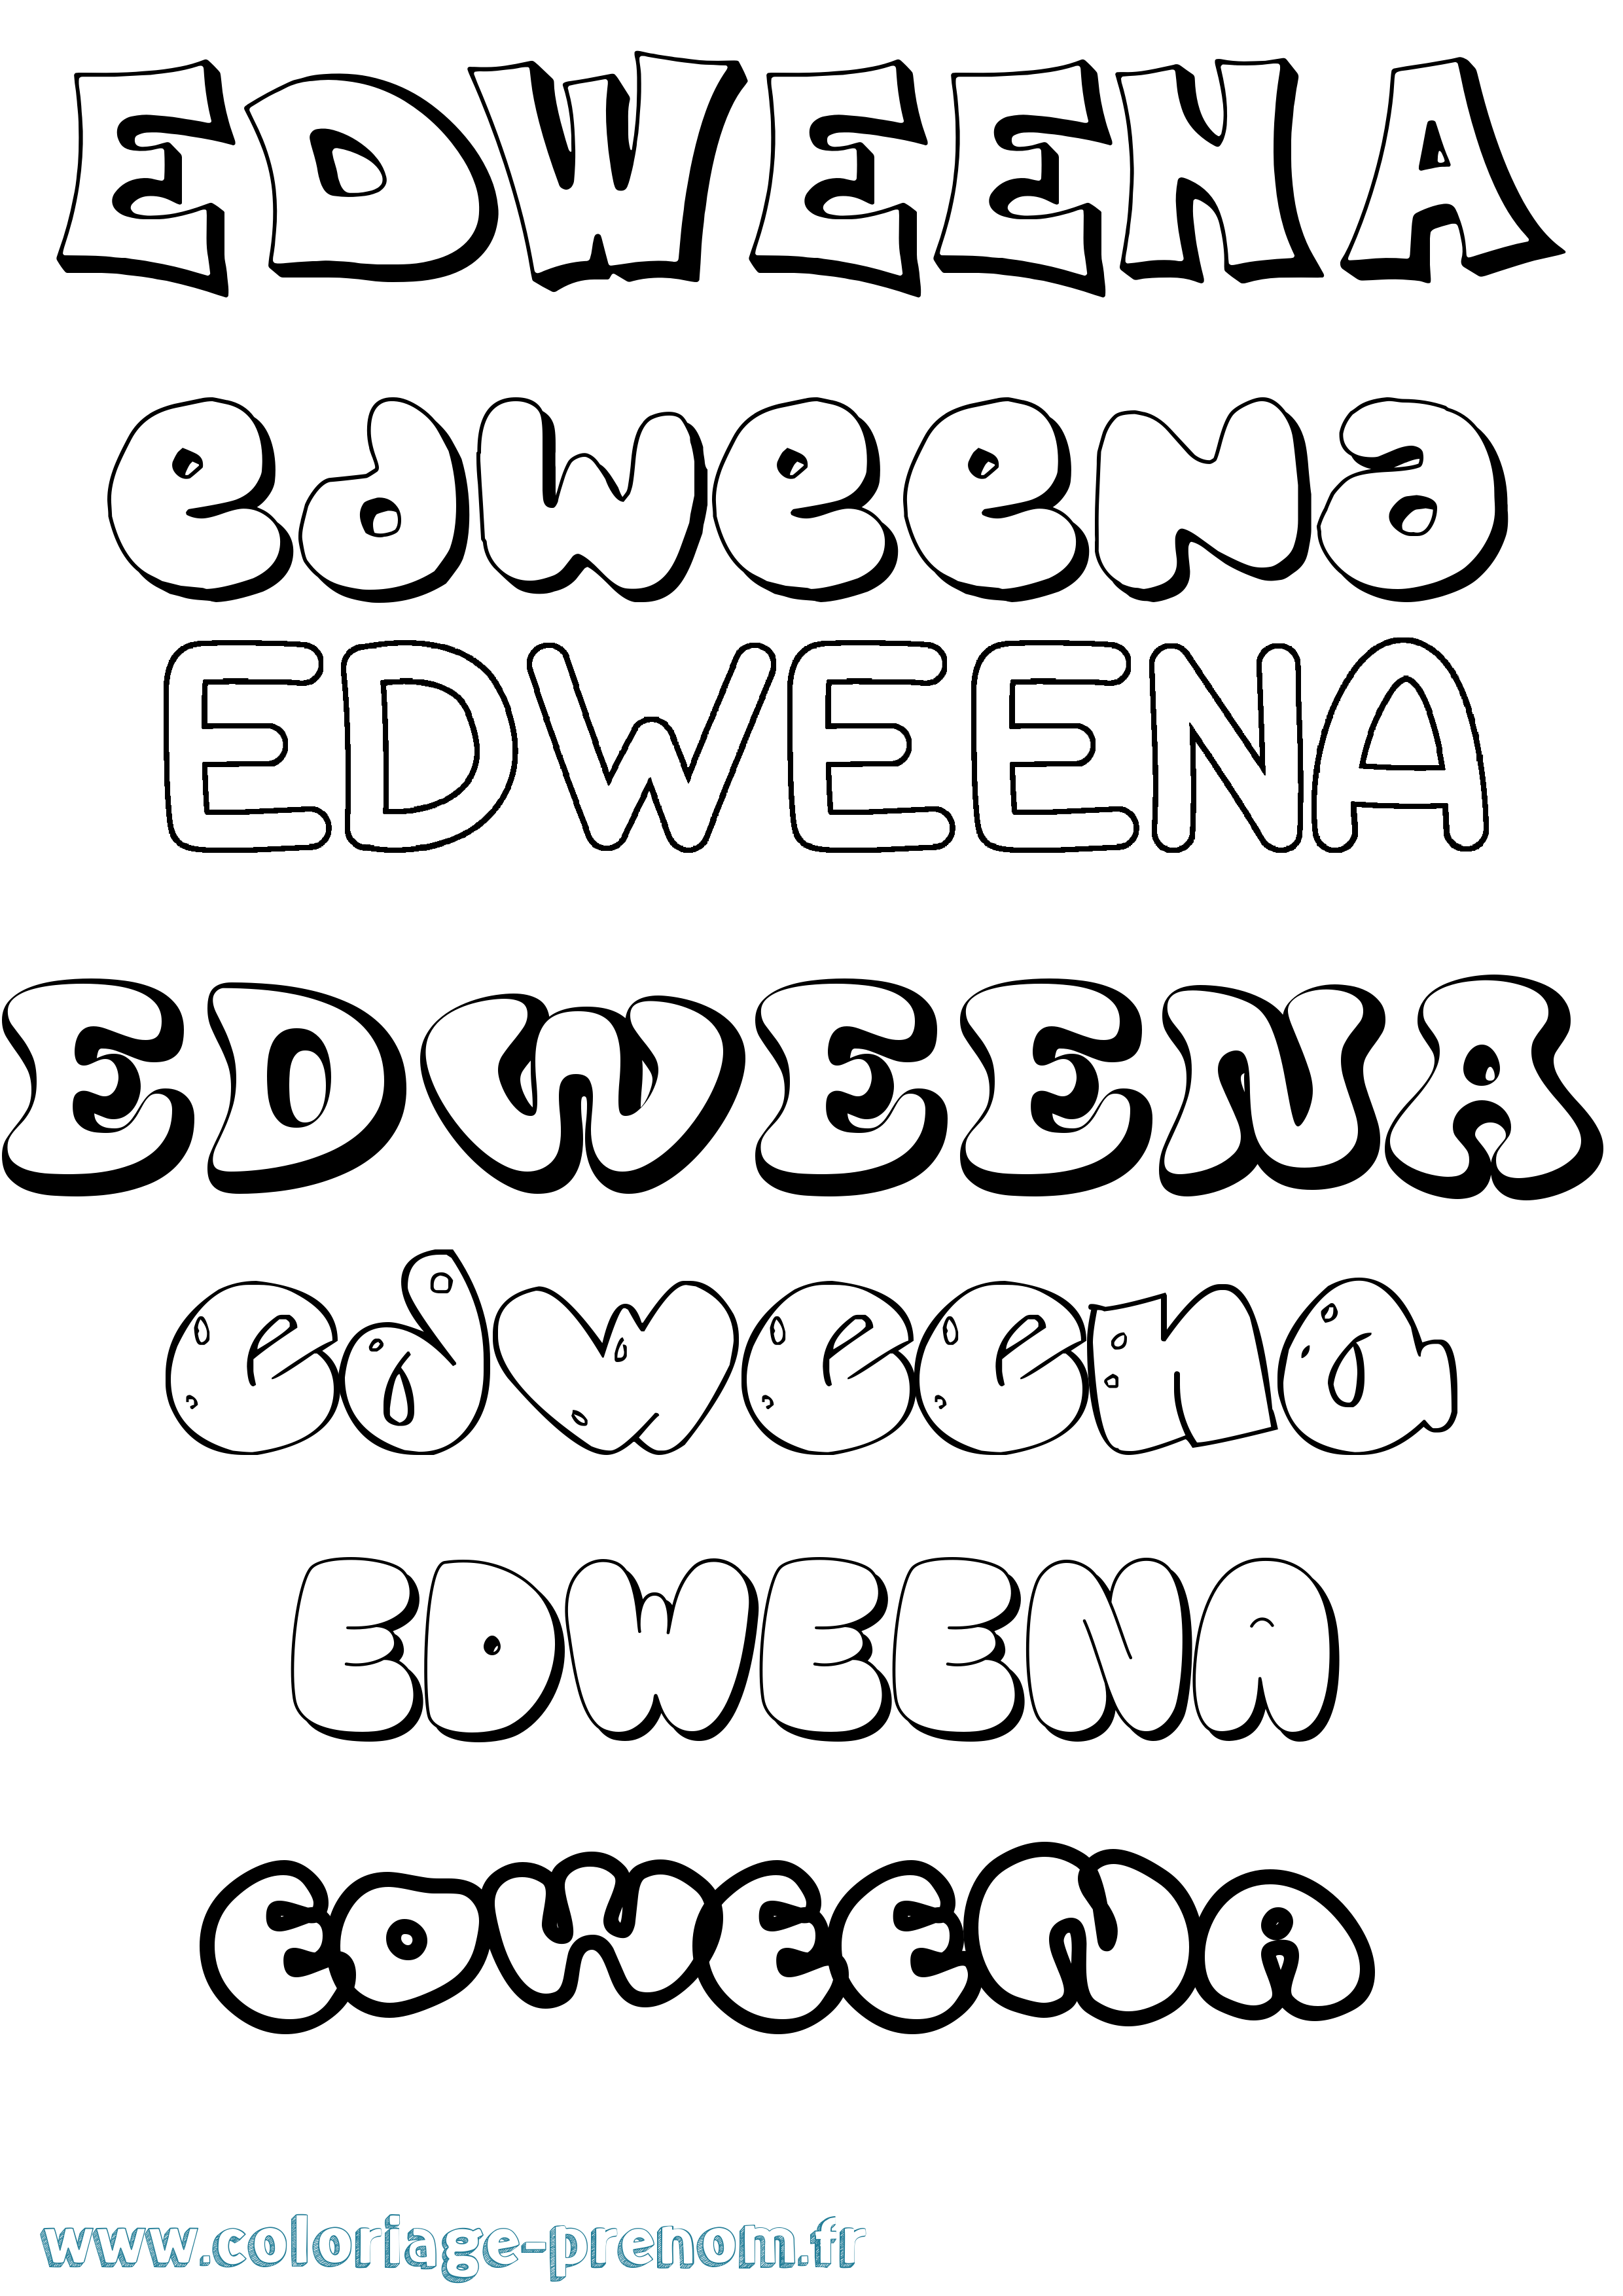 Coloriage prénom Edweena Bubble